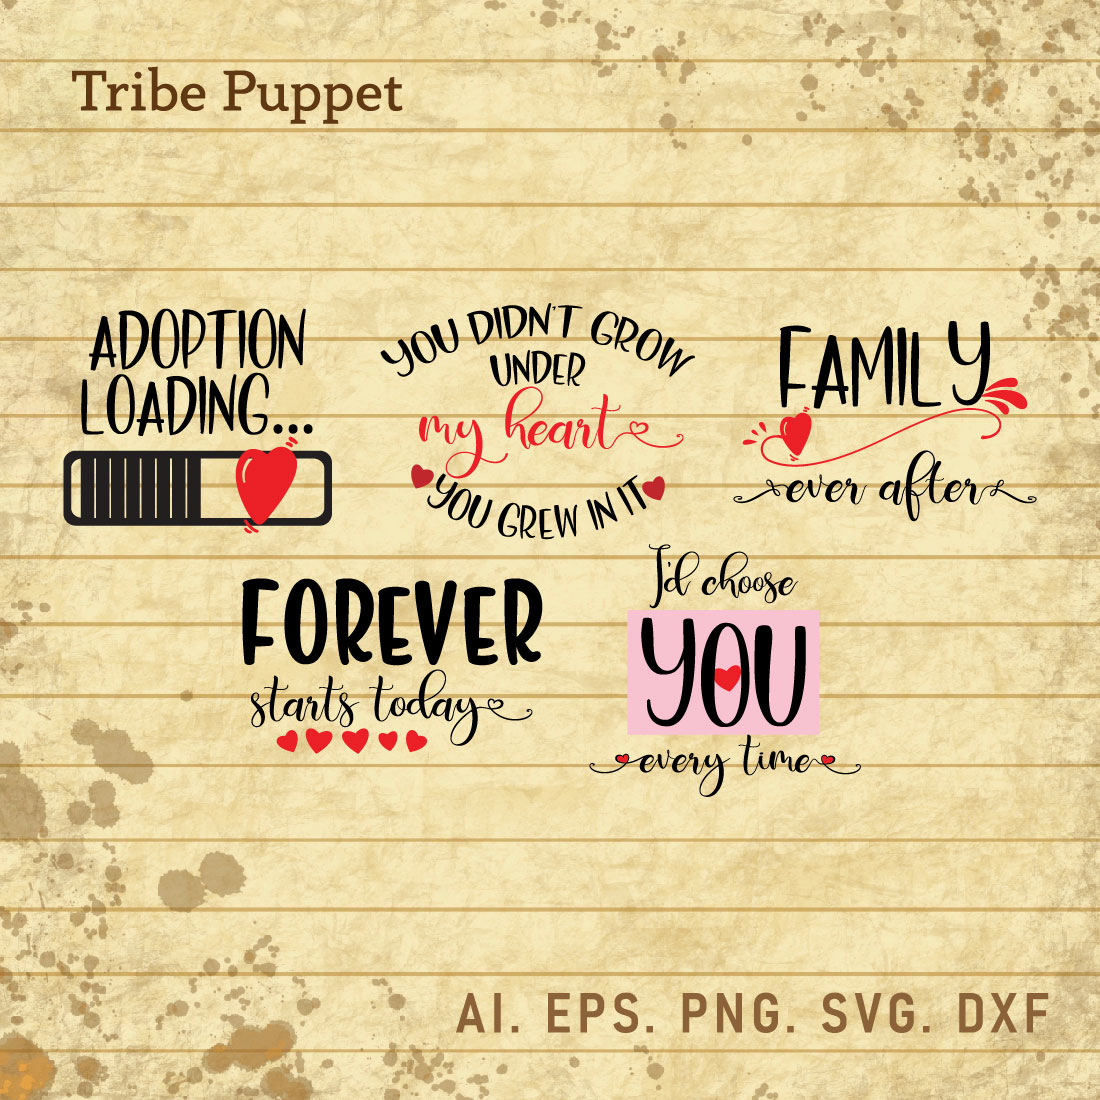 5 Adoption Typography Bundle cover image.